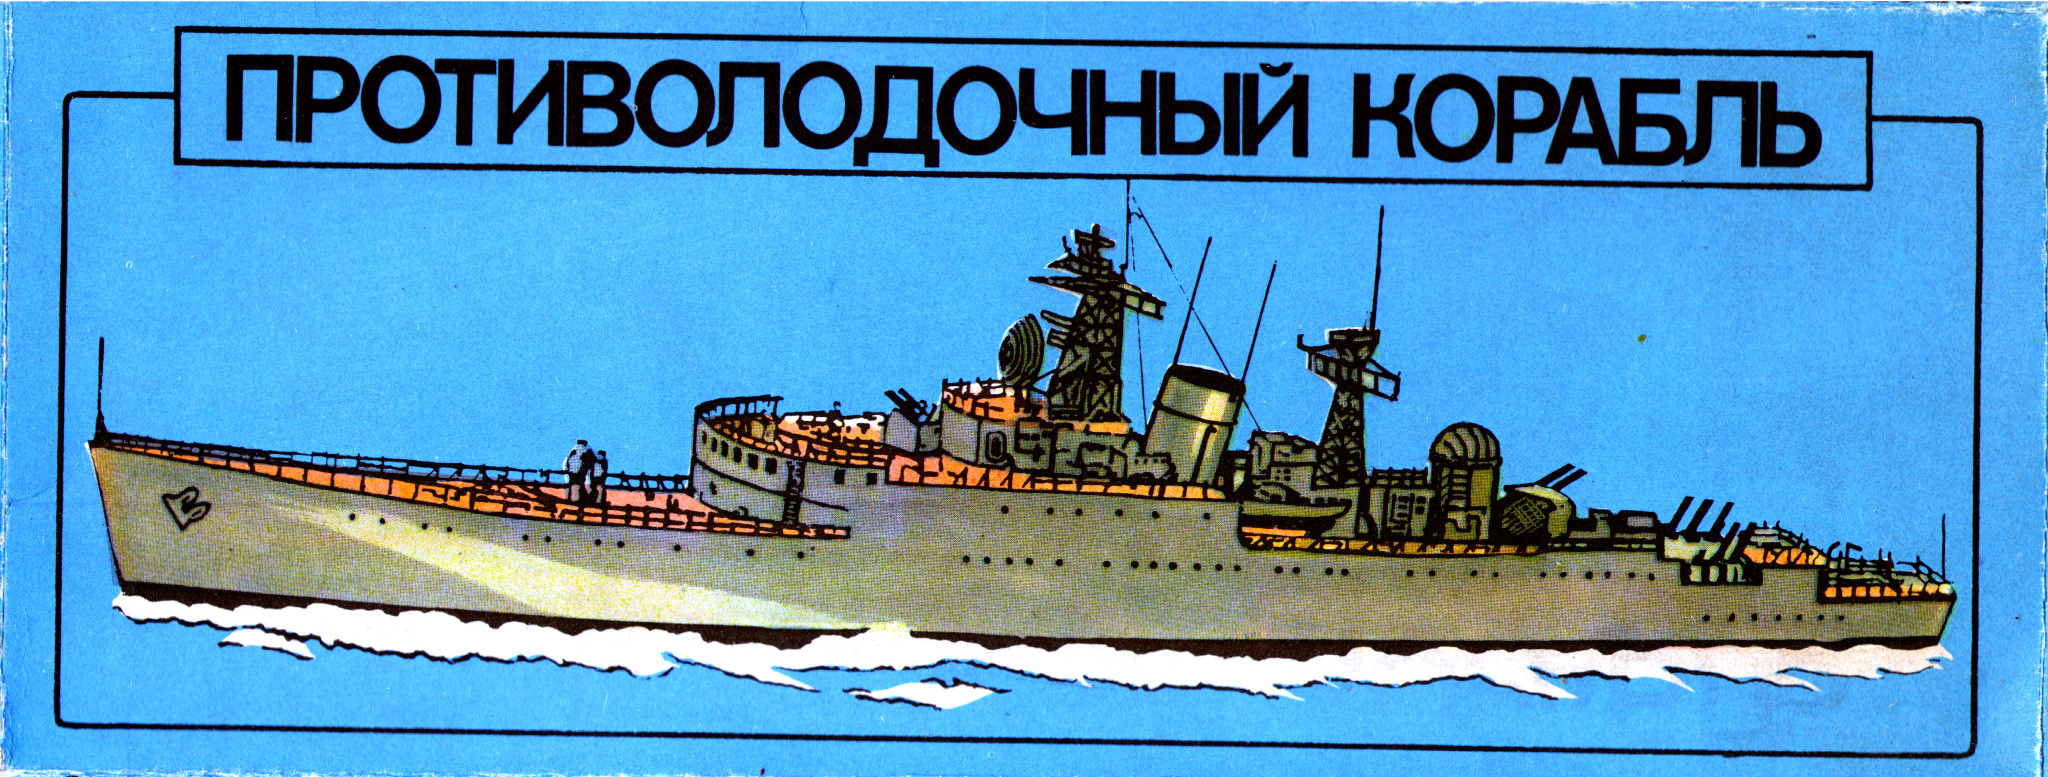 Коробка Противолодочный корабль Индекс 126 (HMS Undine), МОЭЗ Огонек МГ 085-01-4111, Москва, 1980-е